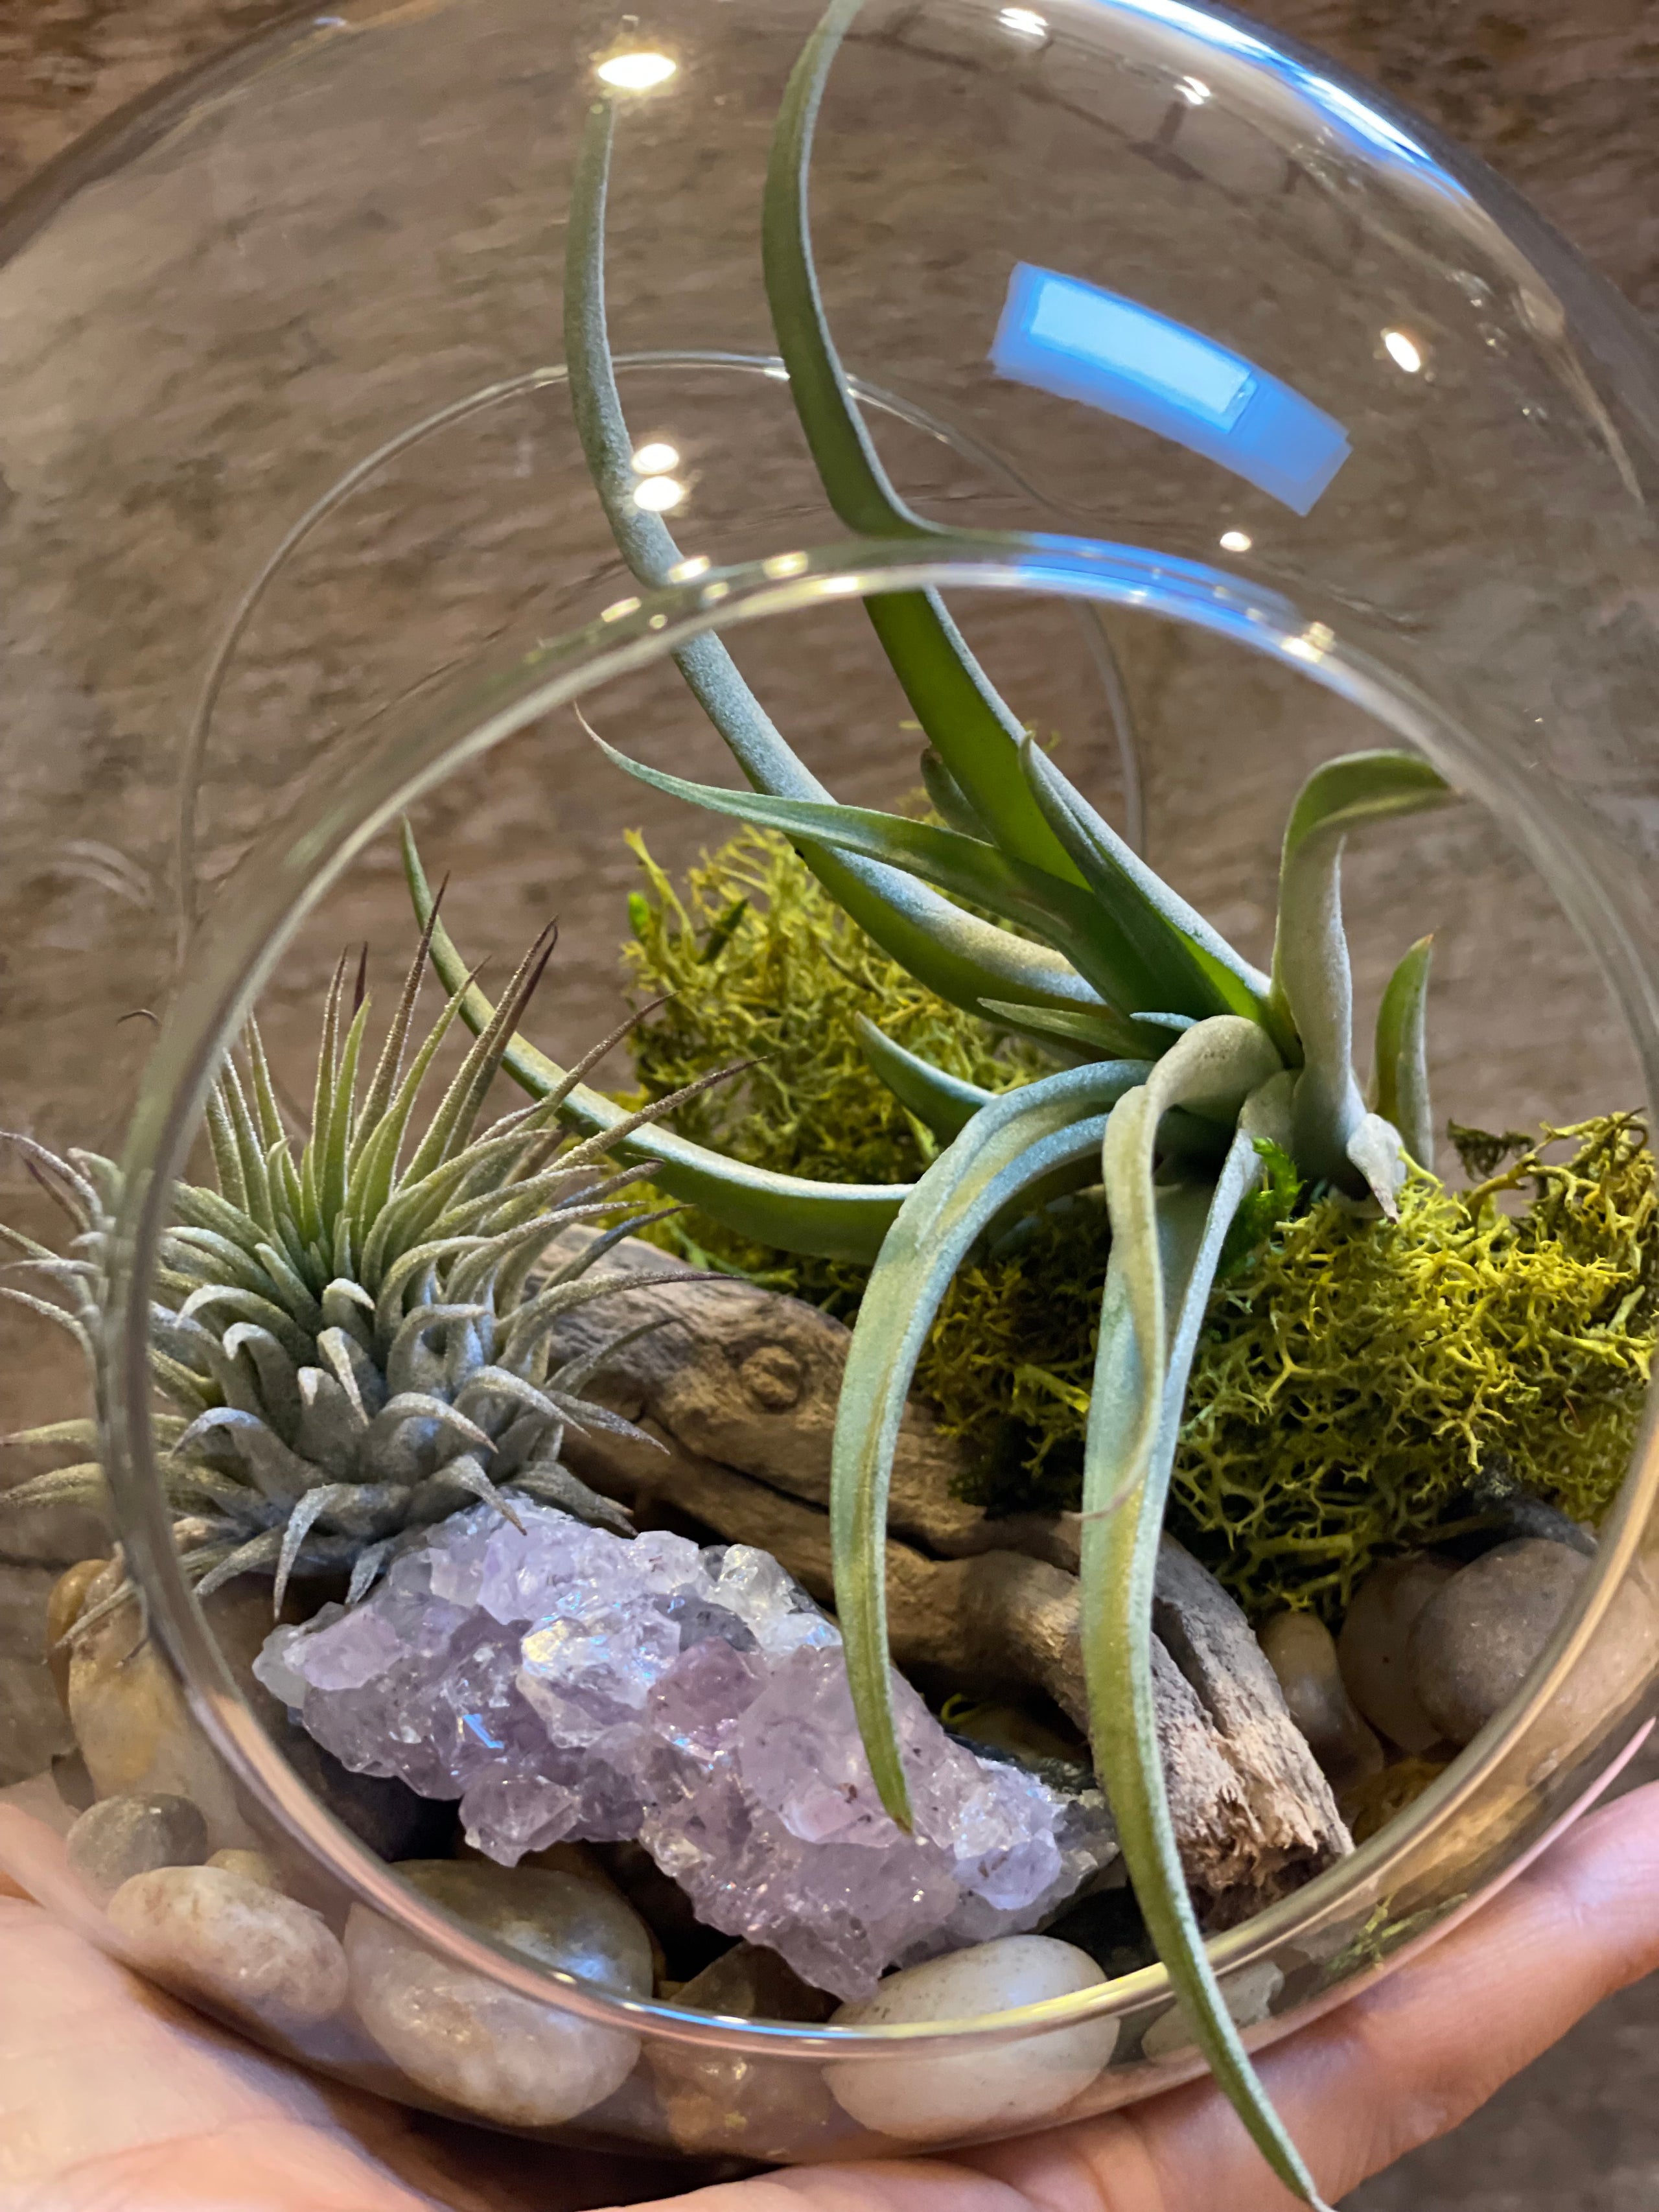 DIY Terrarium Succulent Planter Kit  Includes Hoffman Organic Cactus and  Succulent Soil Mix, Orchid Bark, Decorative Rocks, Moss, and  Professional-Grade Charcoal